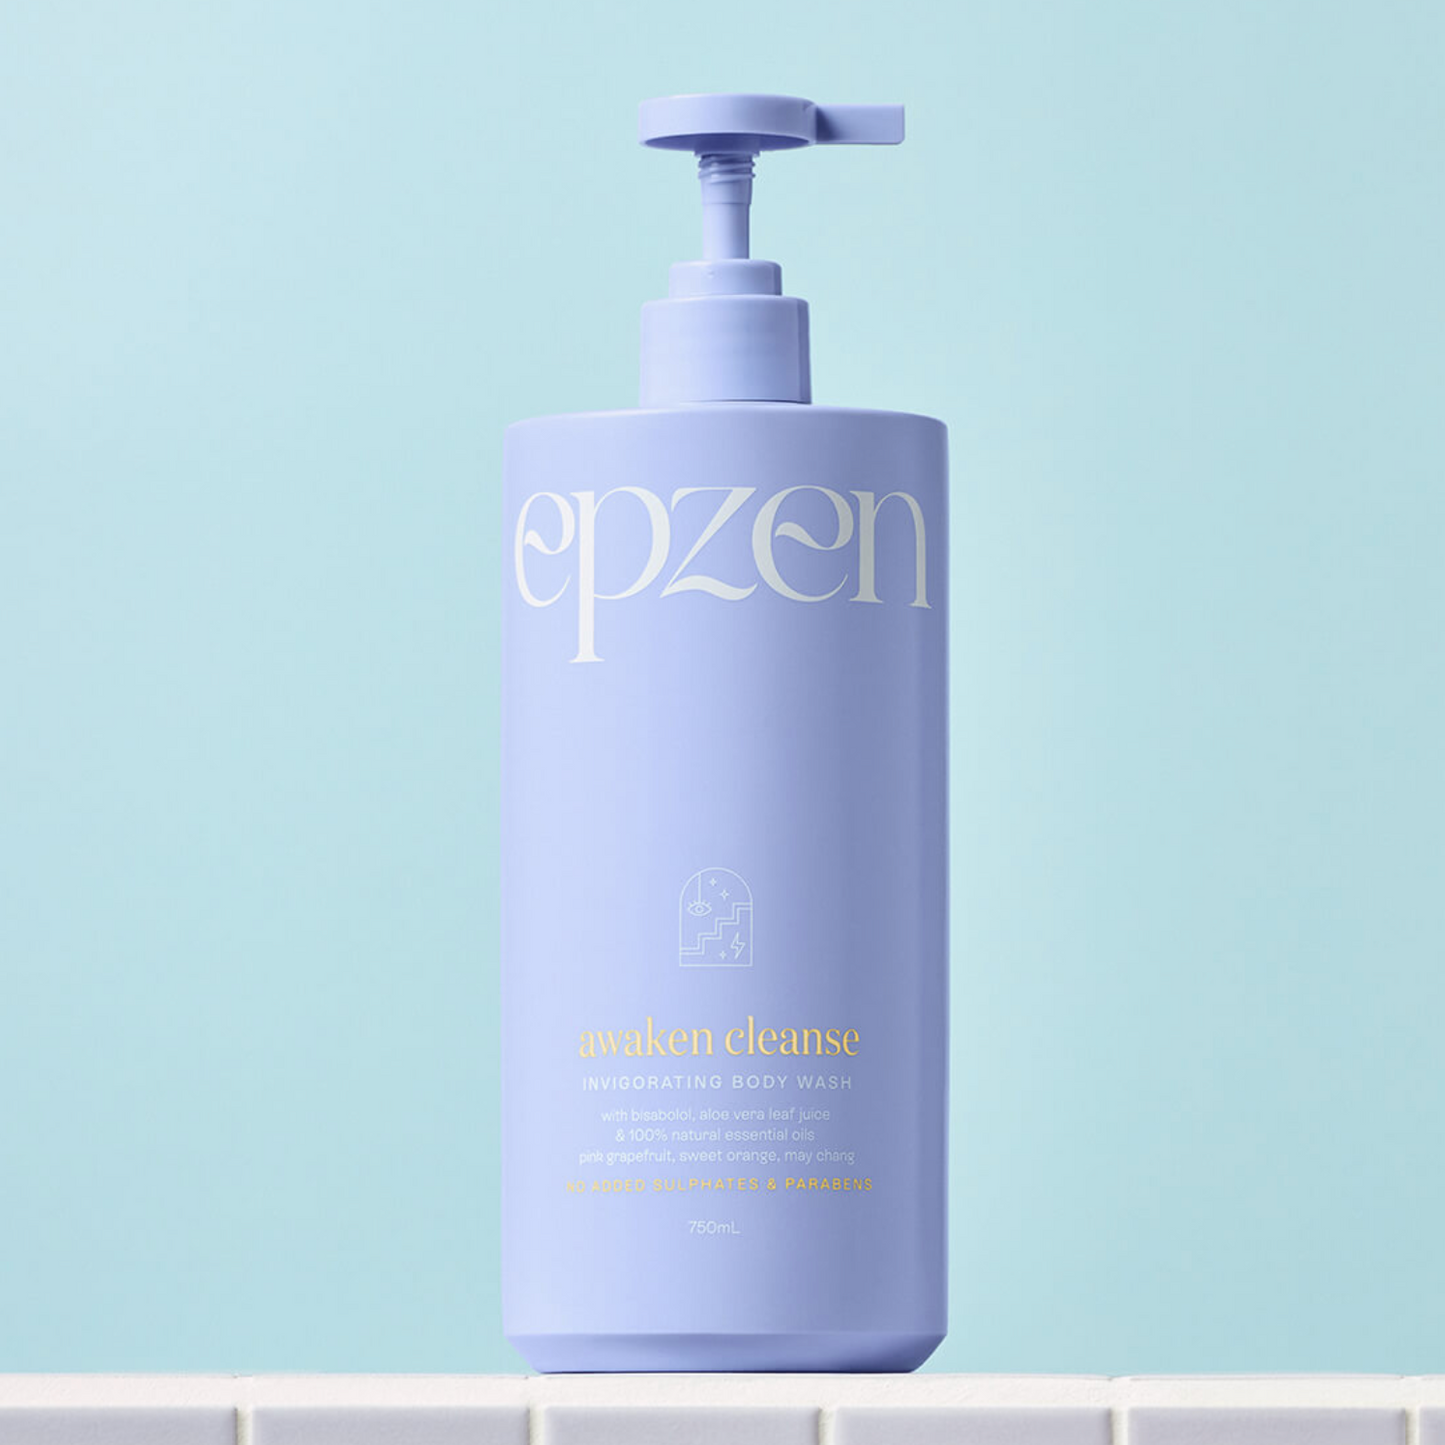 EpZen Invigorating Body Wash 750ml, Awaken Cleanse